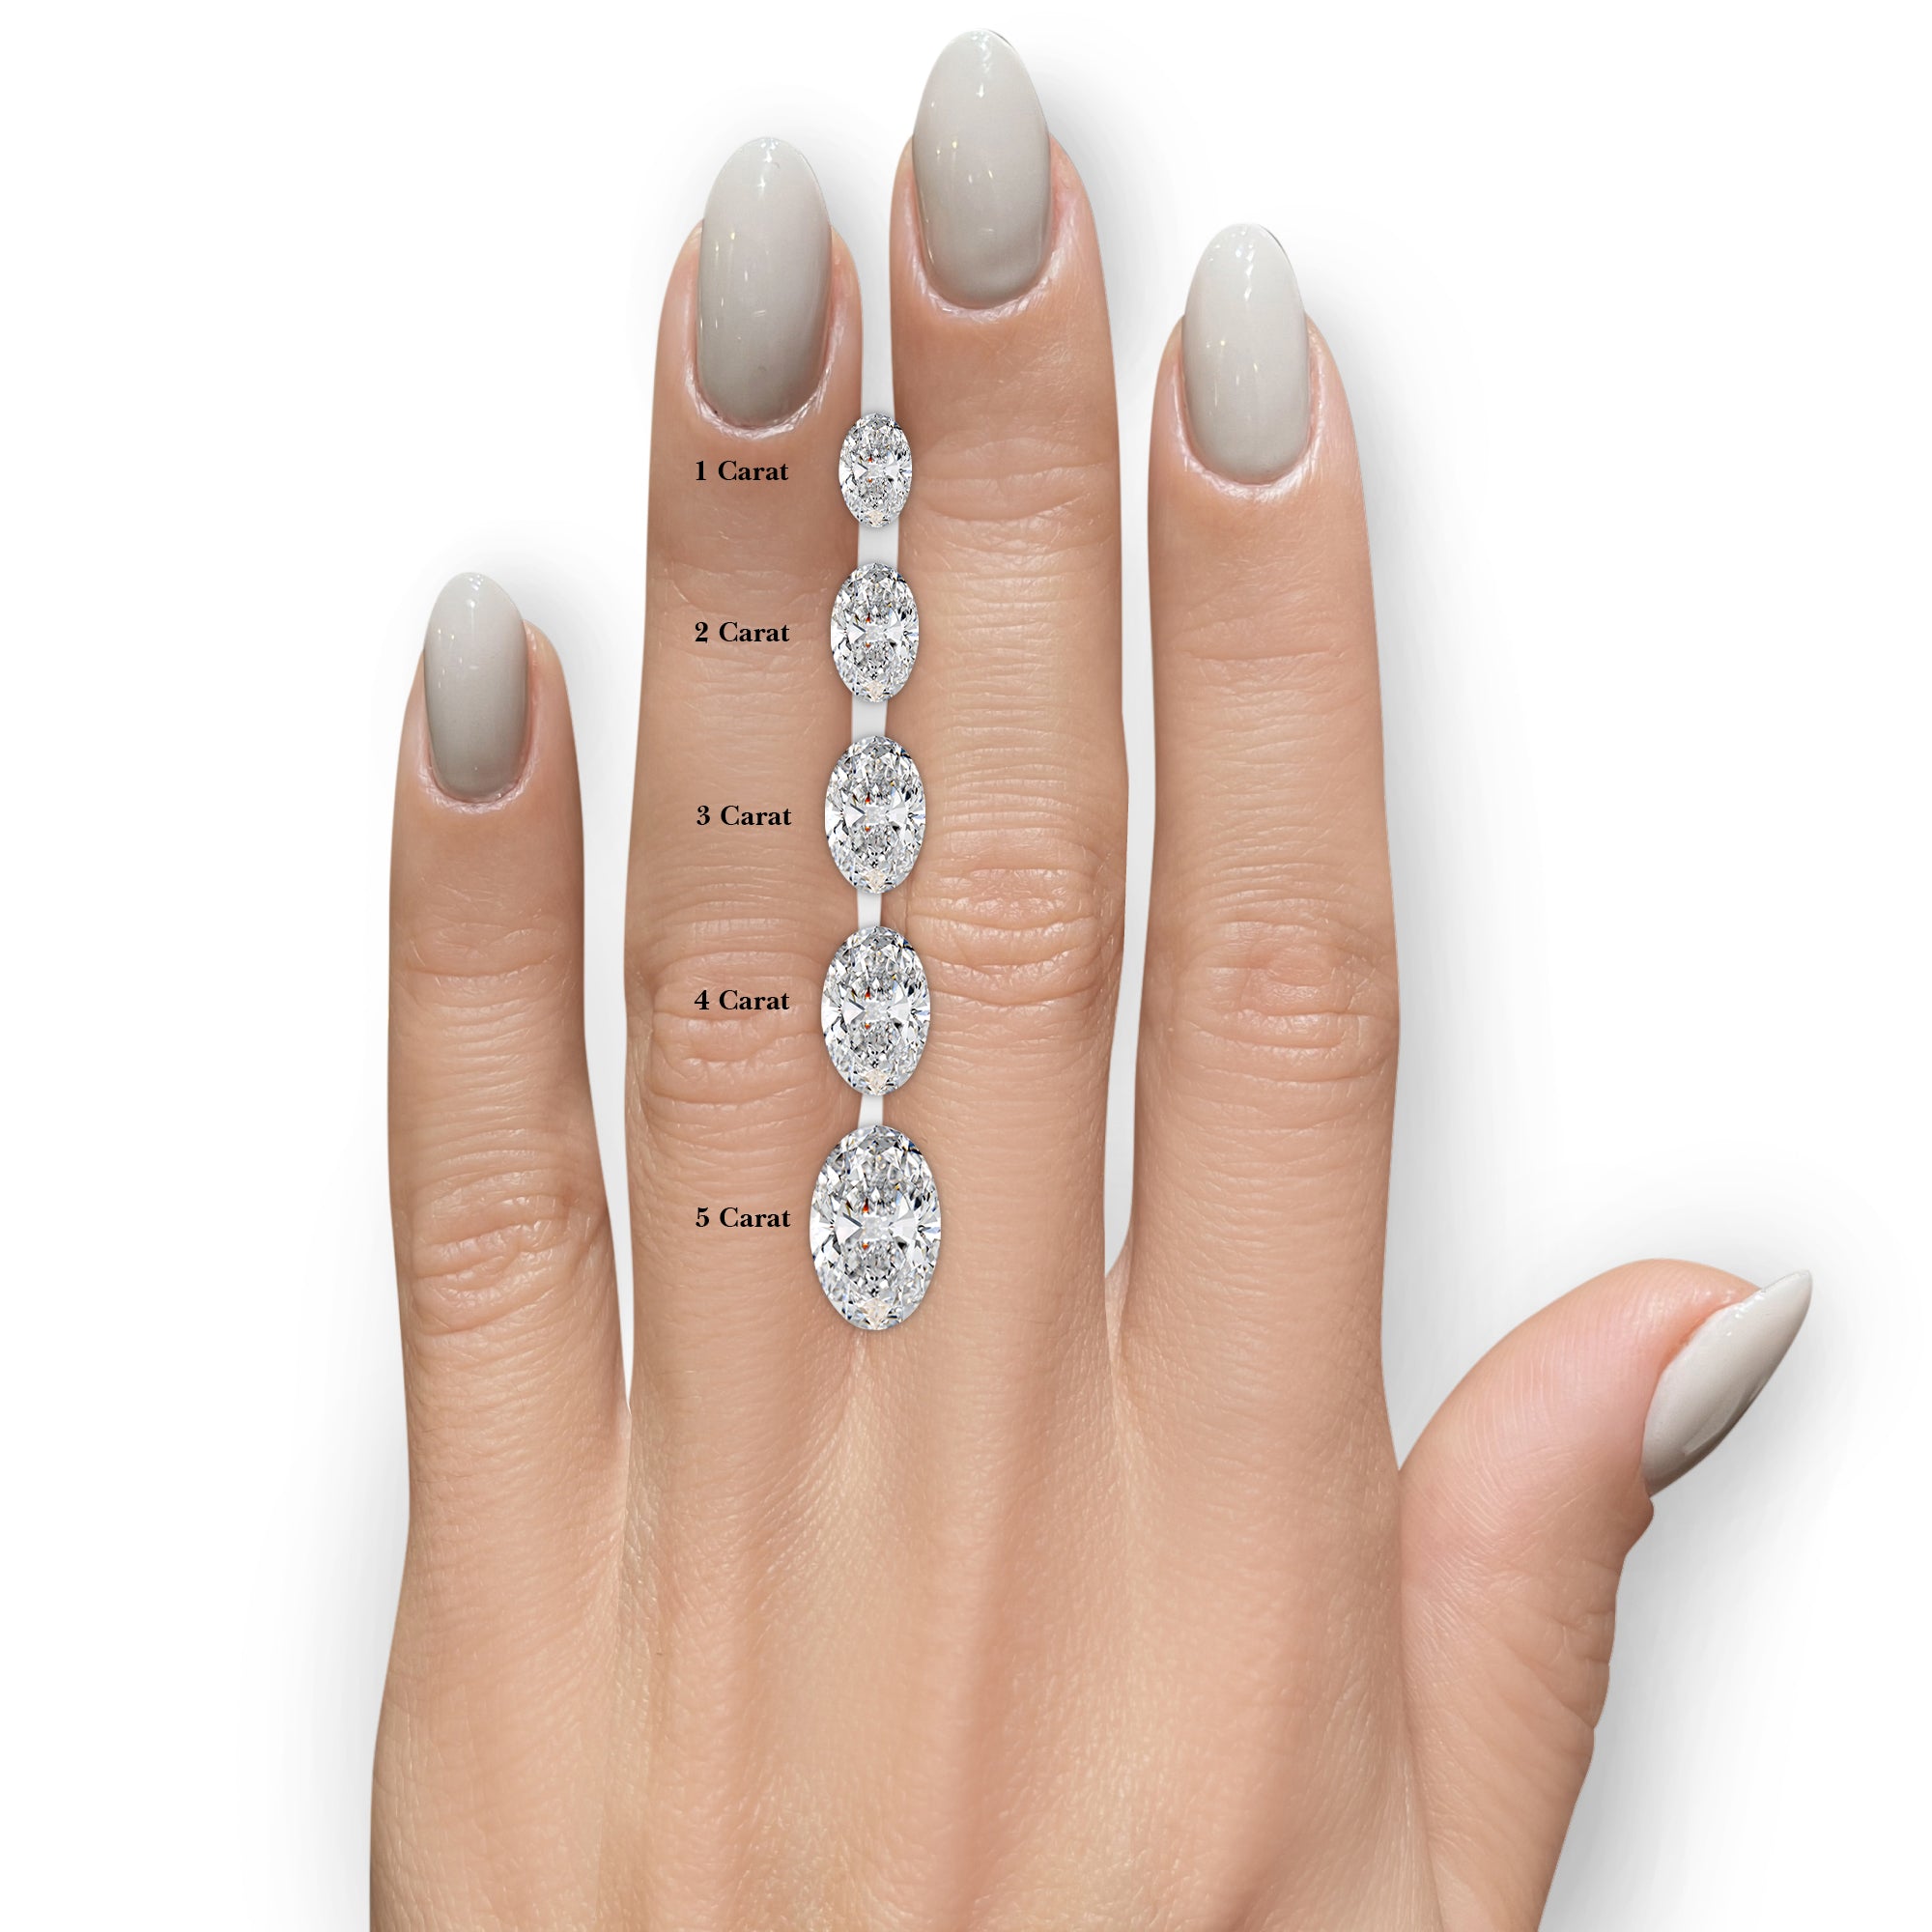 Kamala Diamond Engagement Ring   (3.3 Carat) -18K Yellow Gold